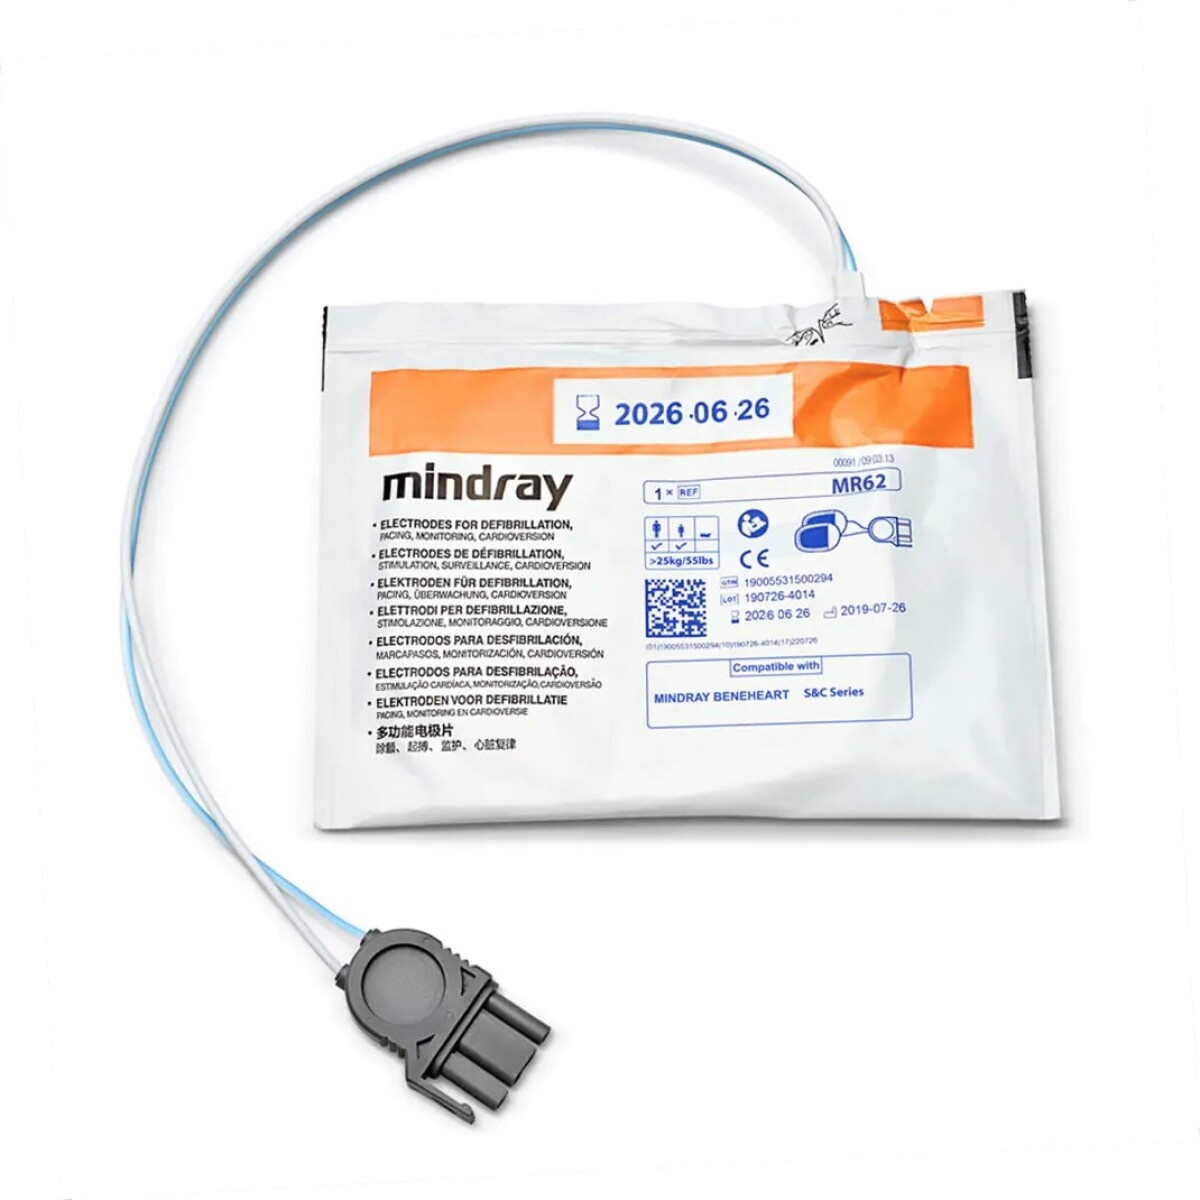 Mindray Elektroden MR62 € 85.02